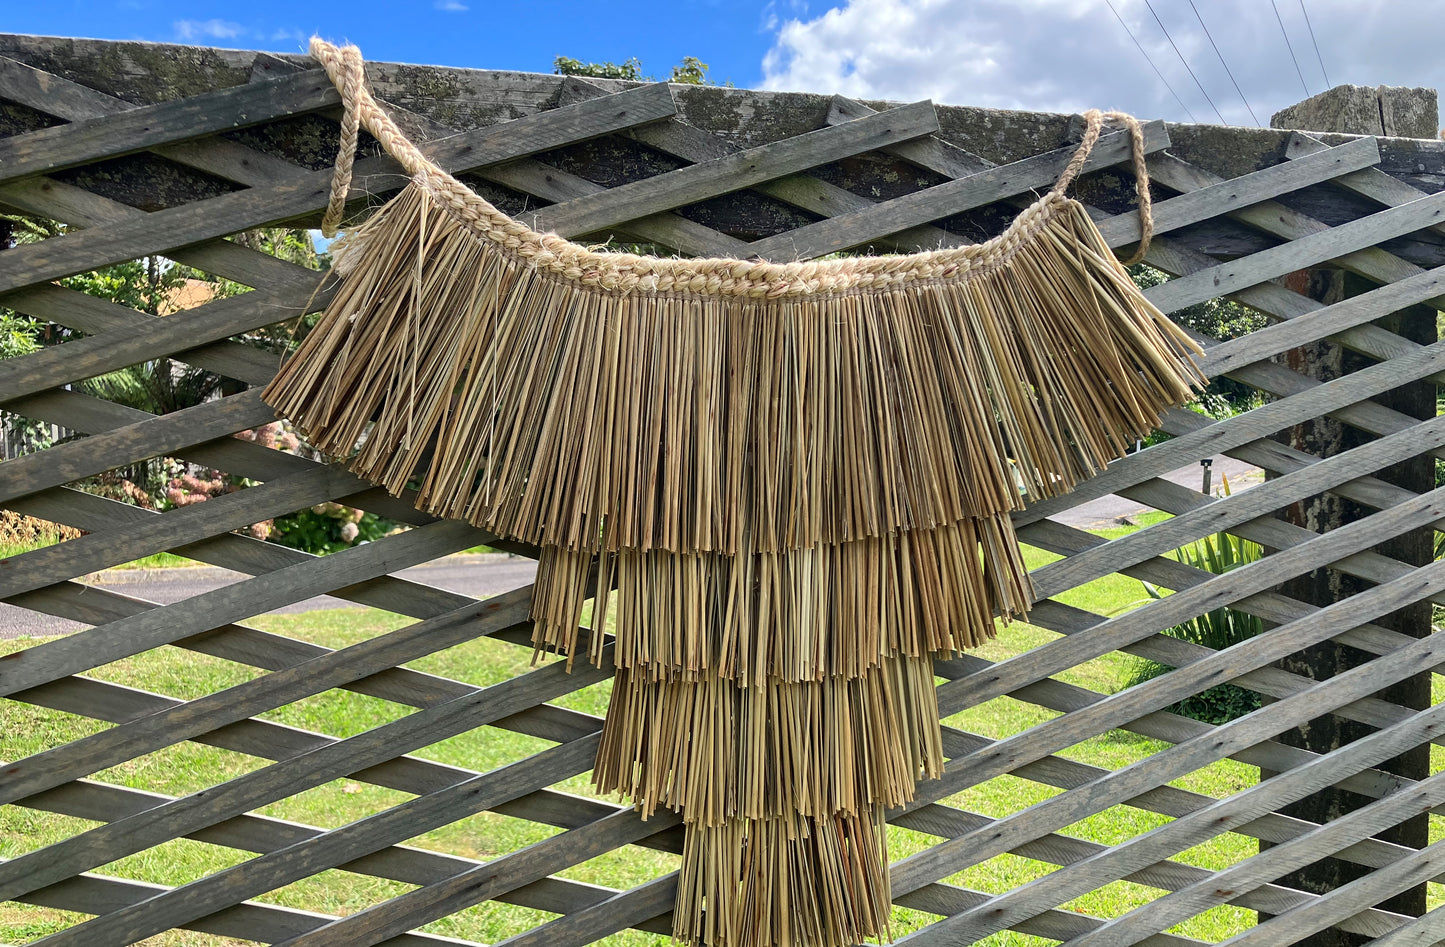 Natura Aura Weaving - Handwoven Traditional Harakeke Maro